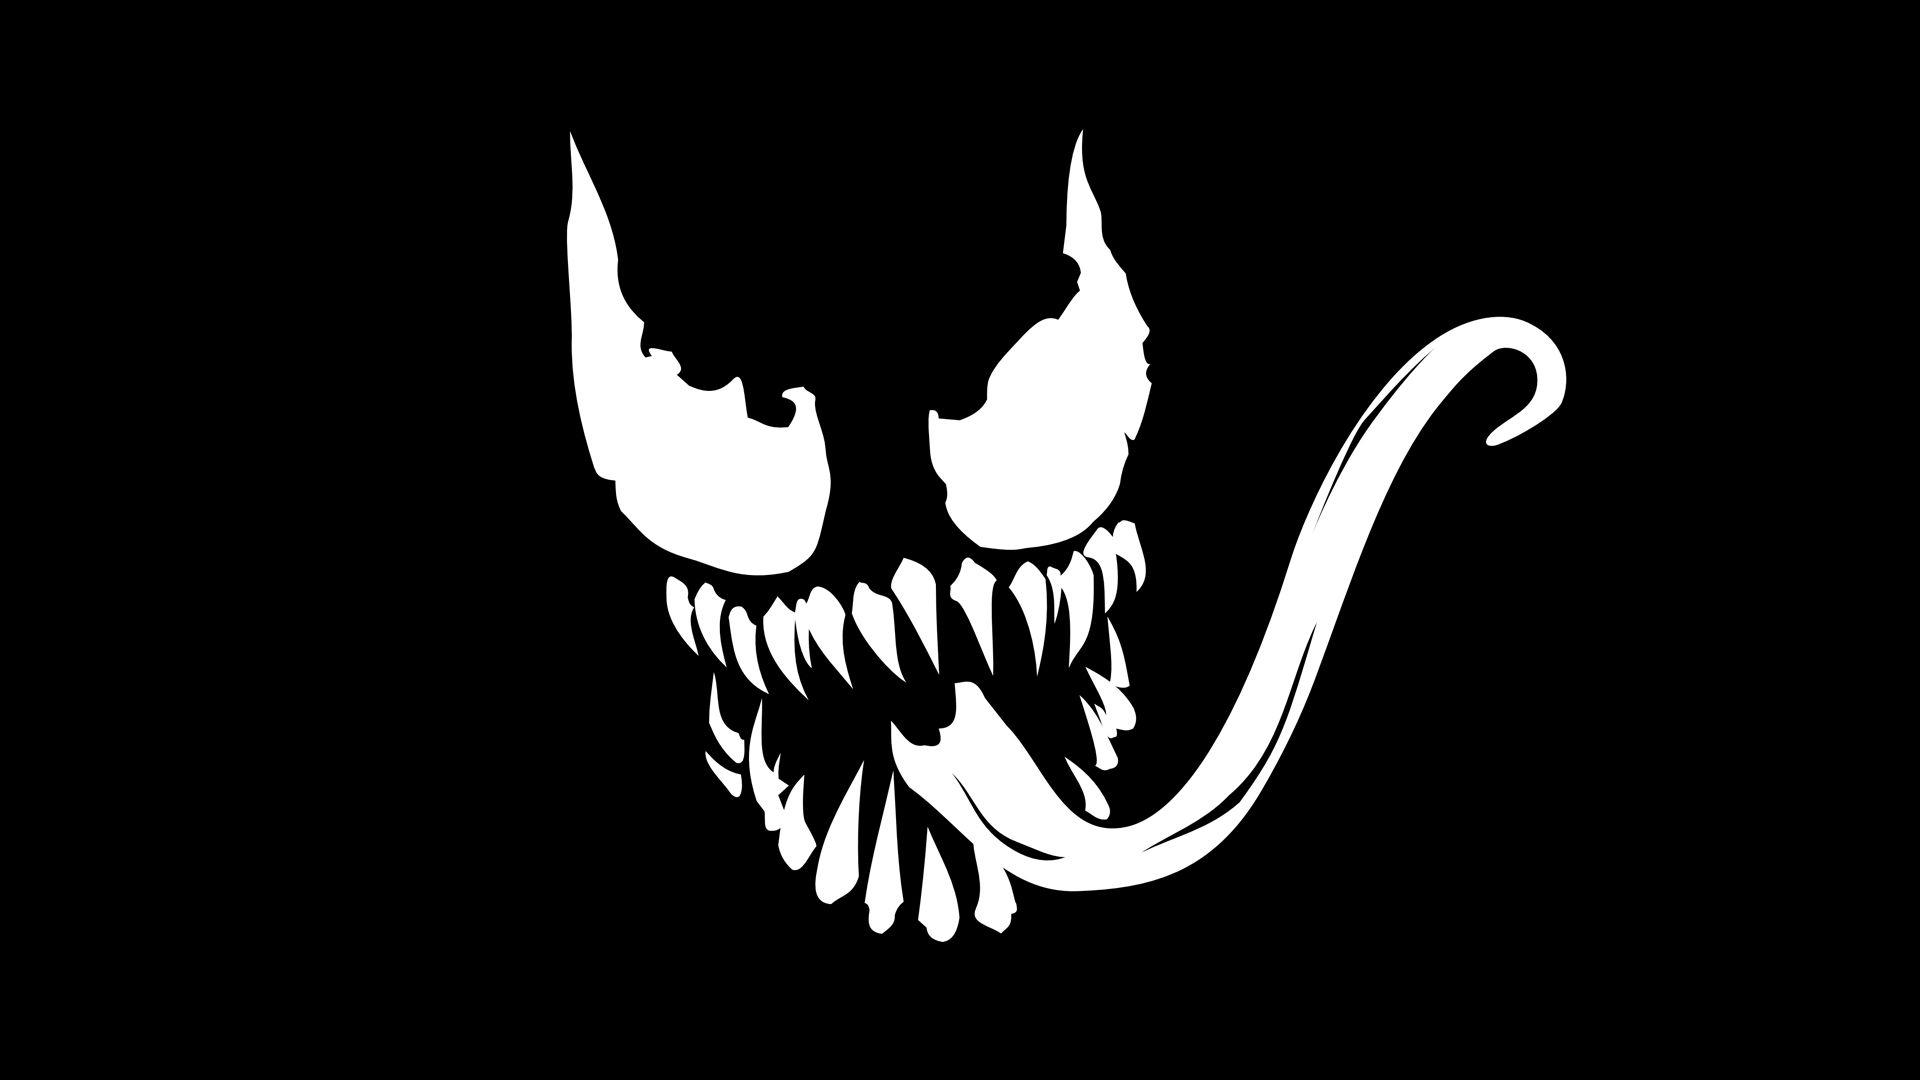 Venom Marvel Logo with Dark Backgrounds.